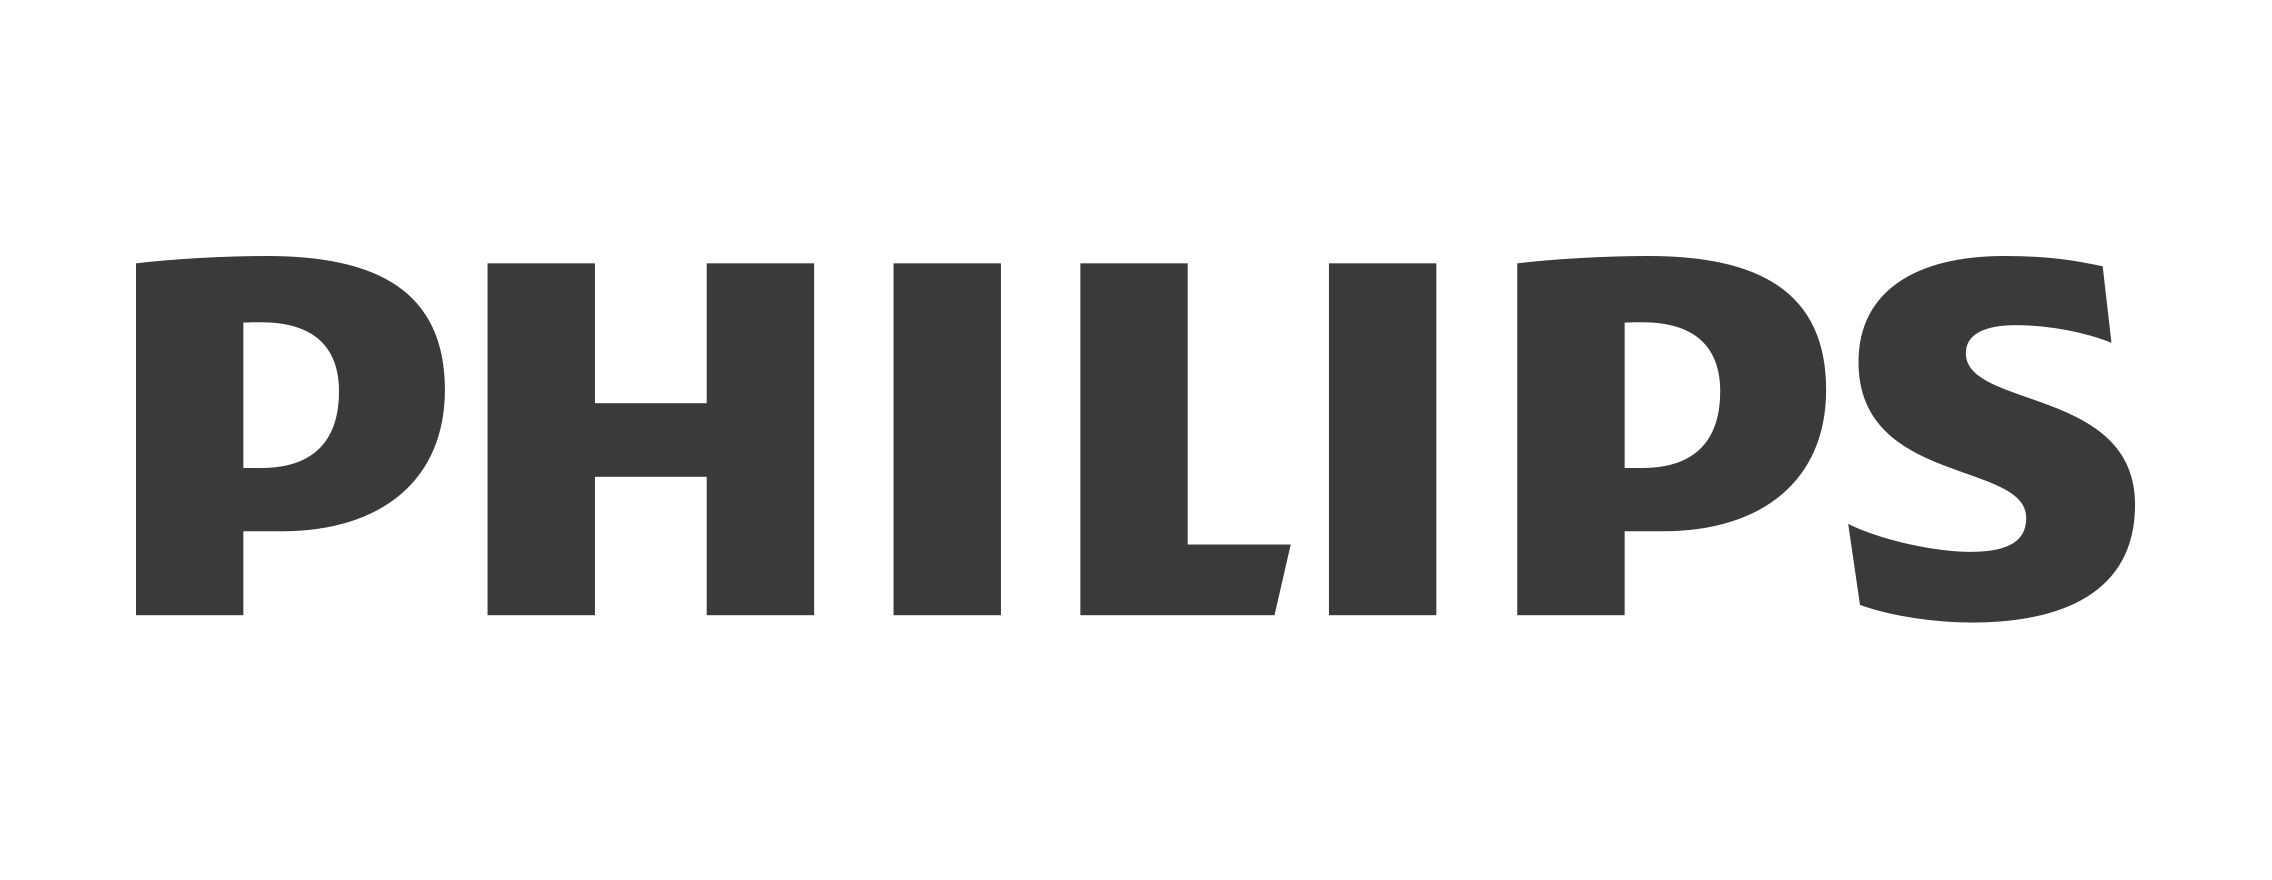 Бренд филипс. Philips бренд. Фирменный знак Philips. Производитель логотип Philips.